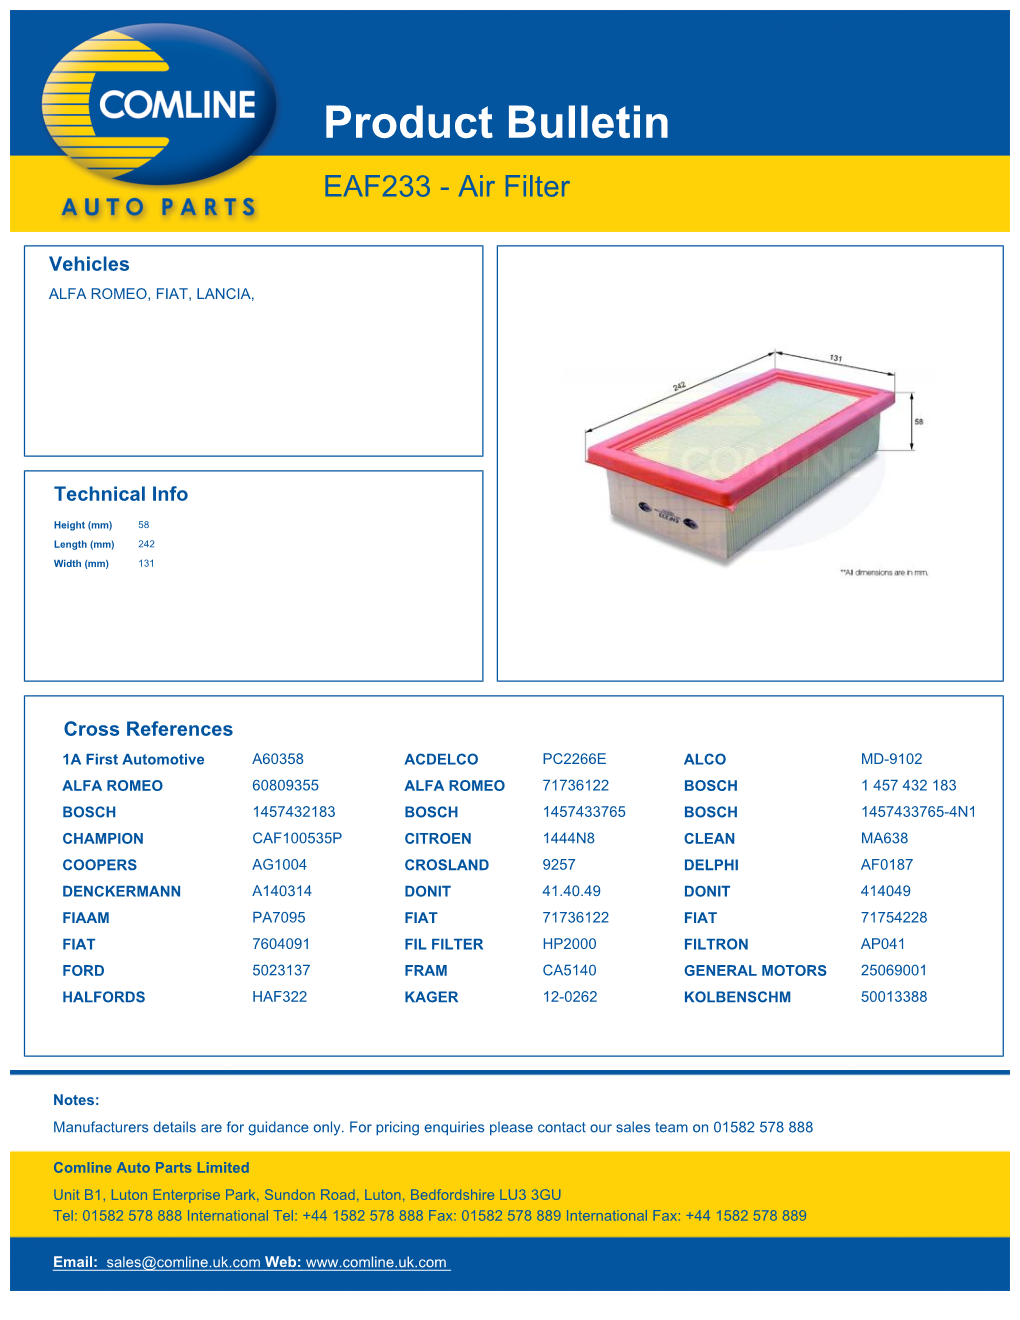 Product Bulletin EAF233 - Air Filter